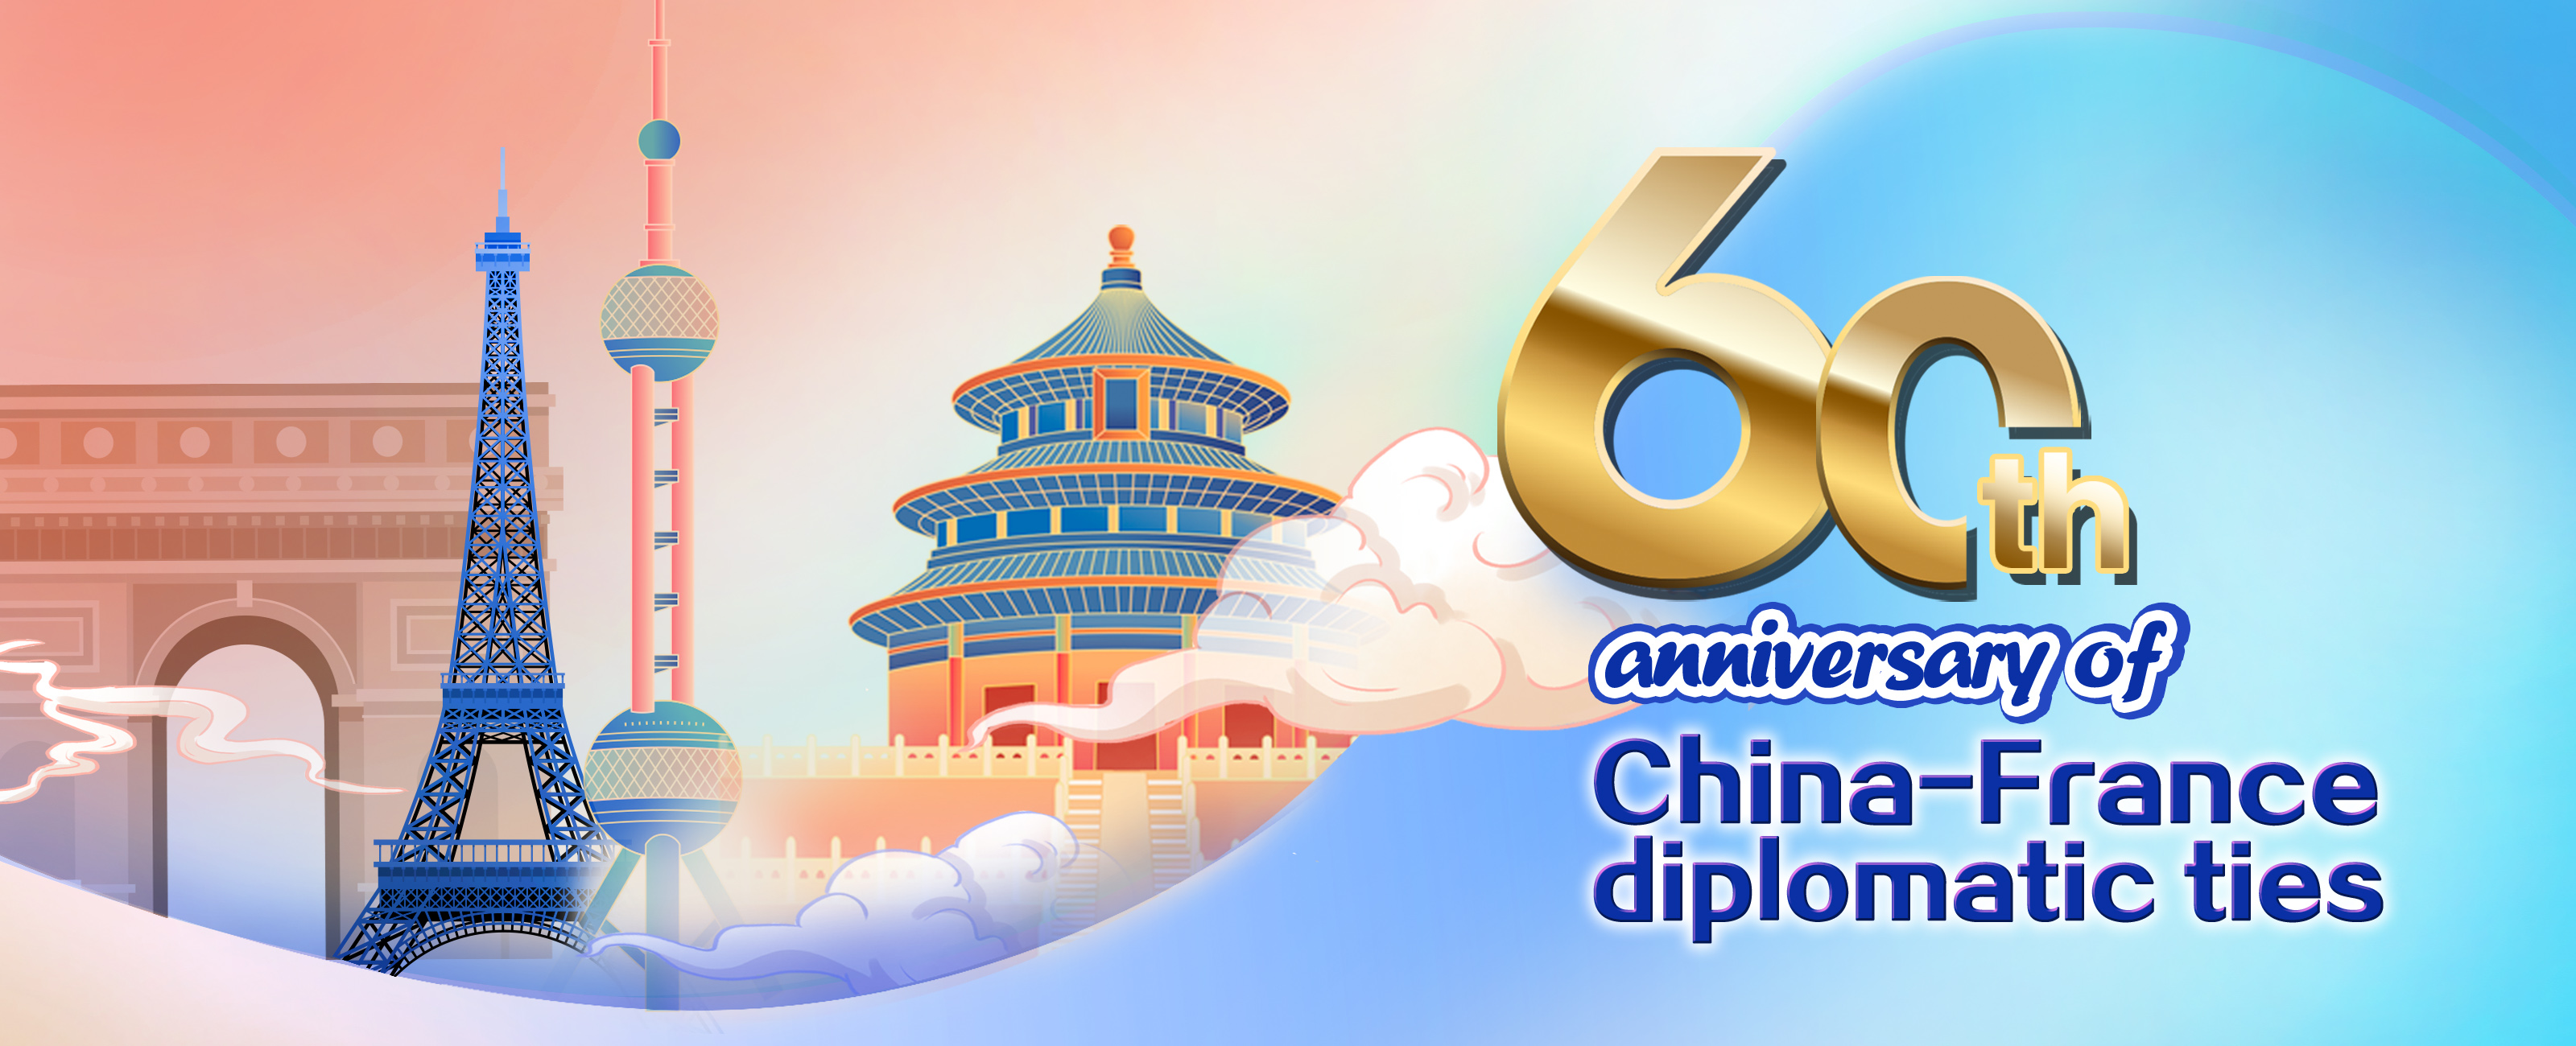 60th anniversary of China-France diplomatic ties - CGTN